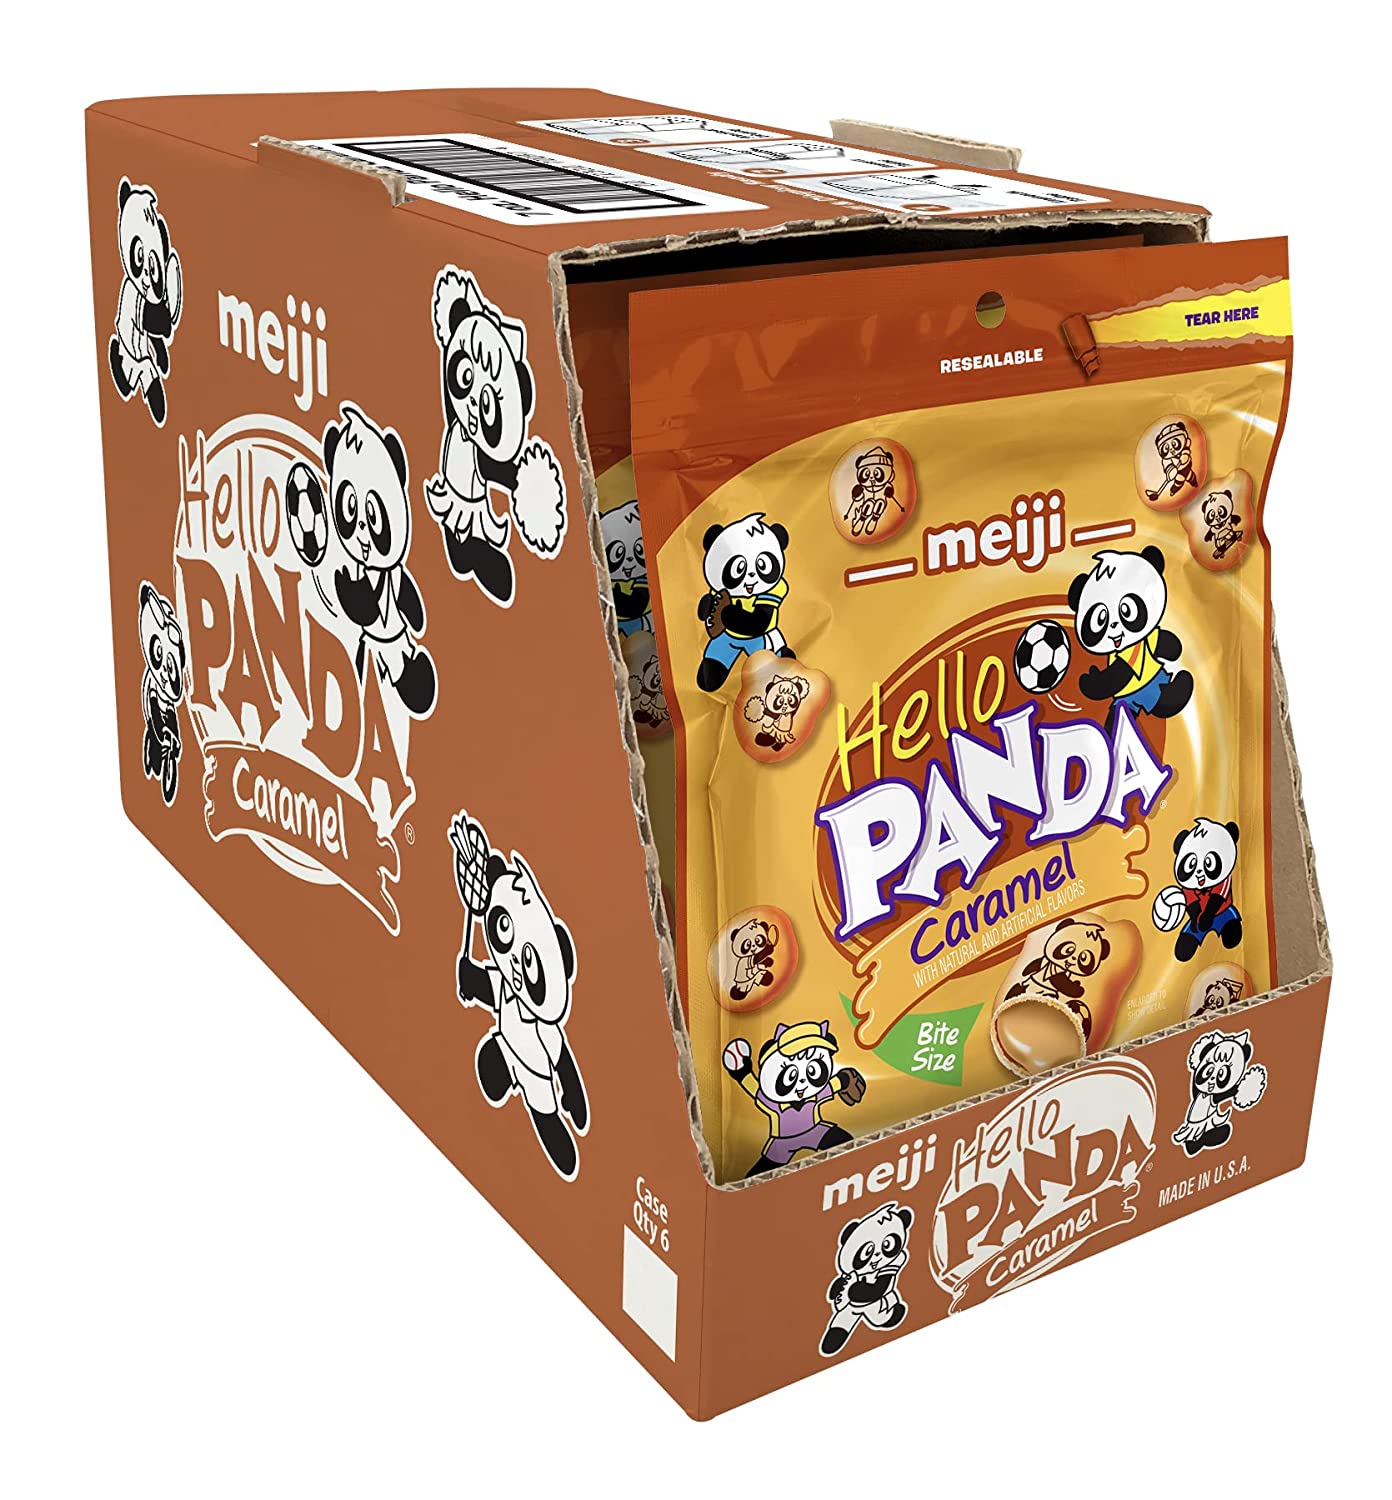 Hello Panda Caramel Pouch - 7oz